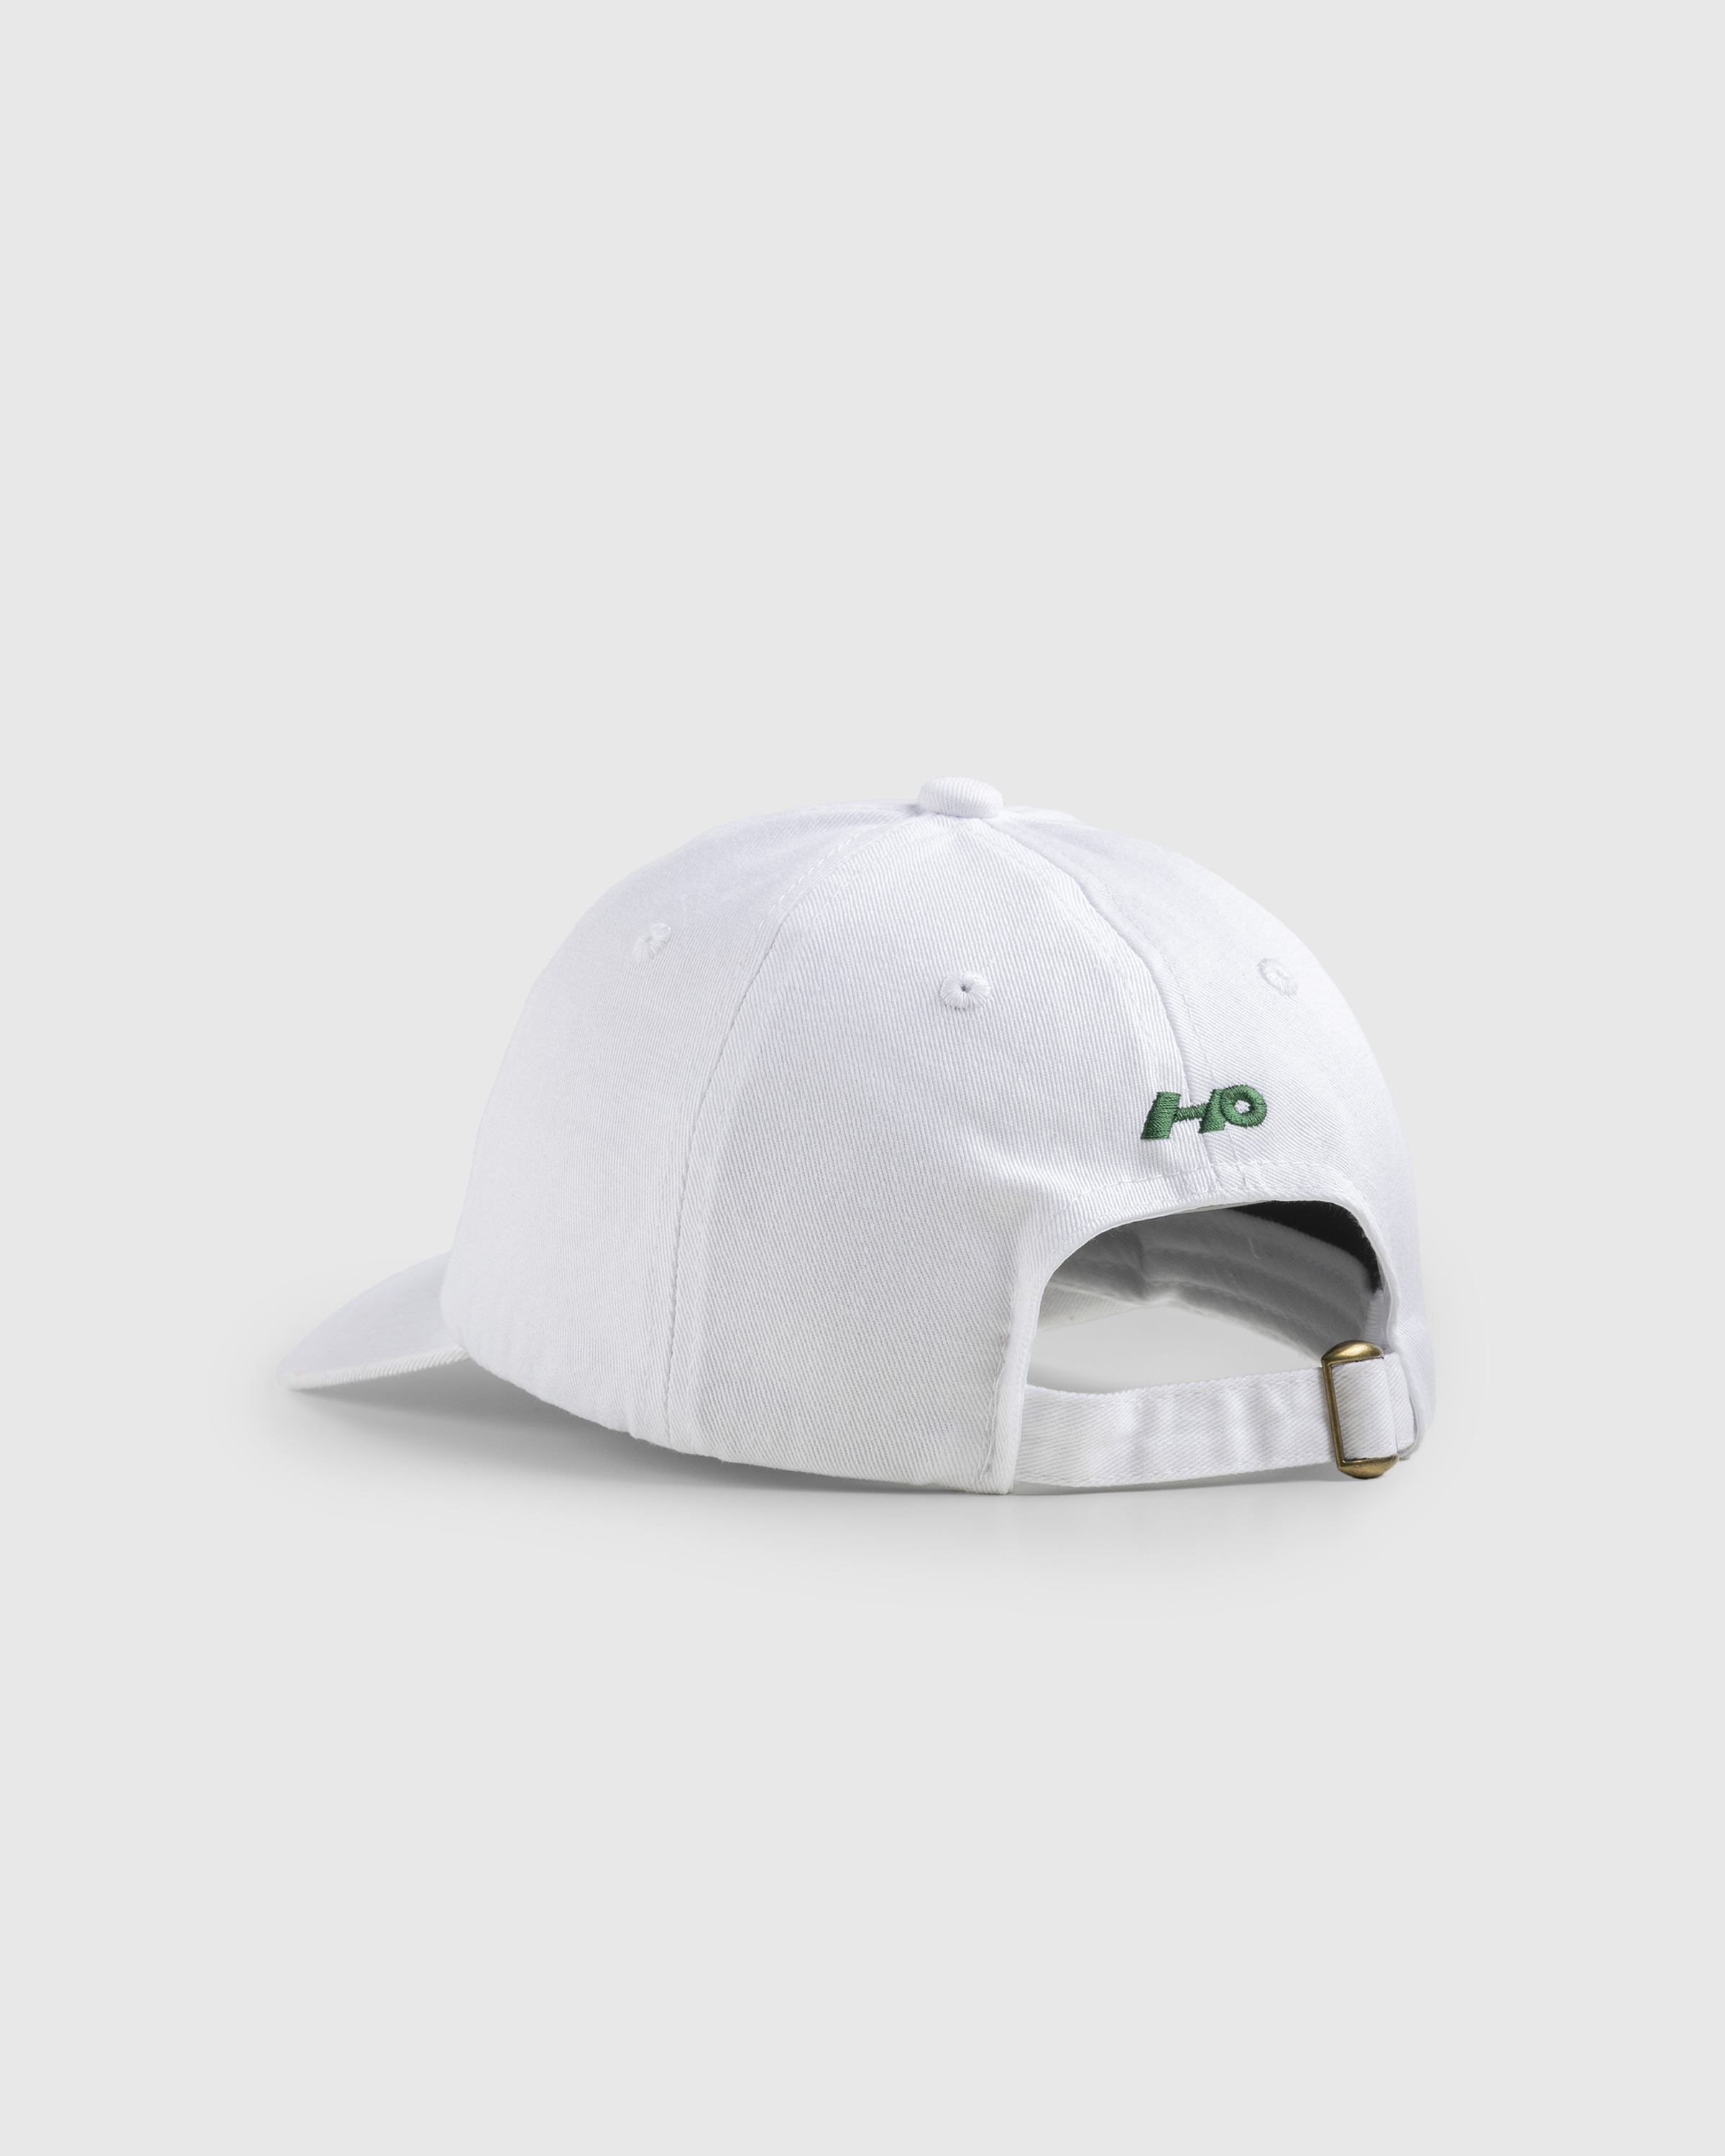 HO HO COCO – Spiritual Guide Hat White/Green - Caps - White - Image 3